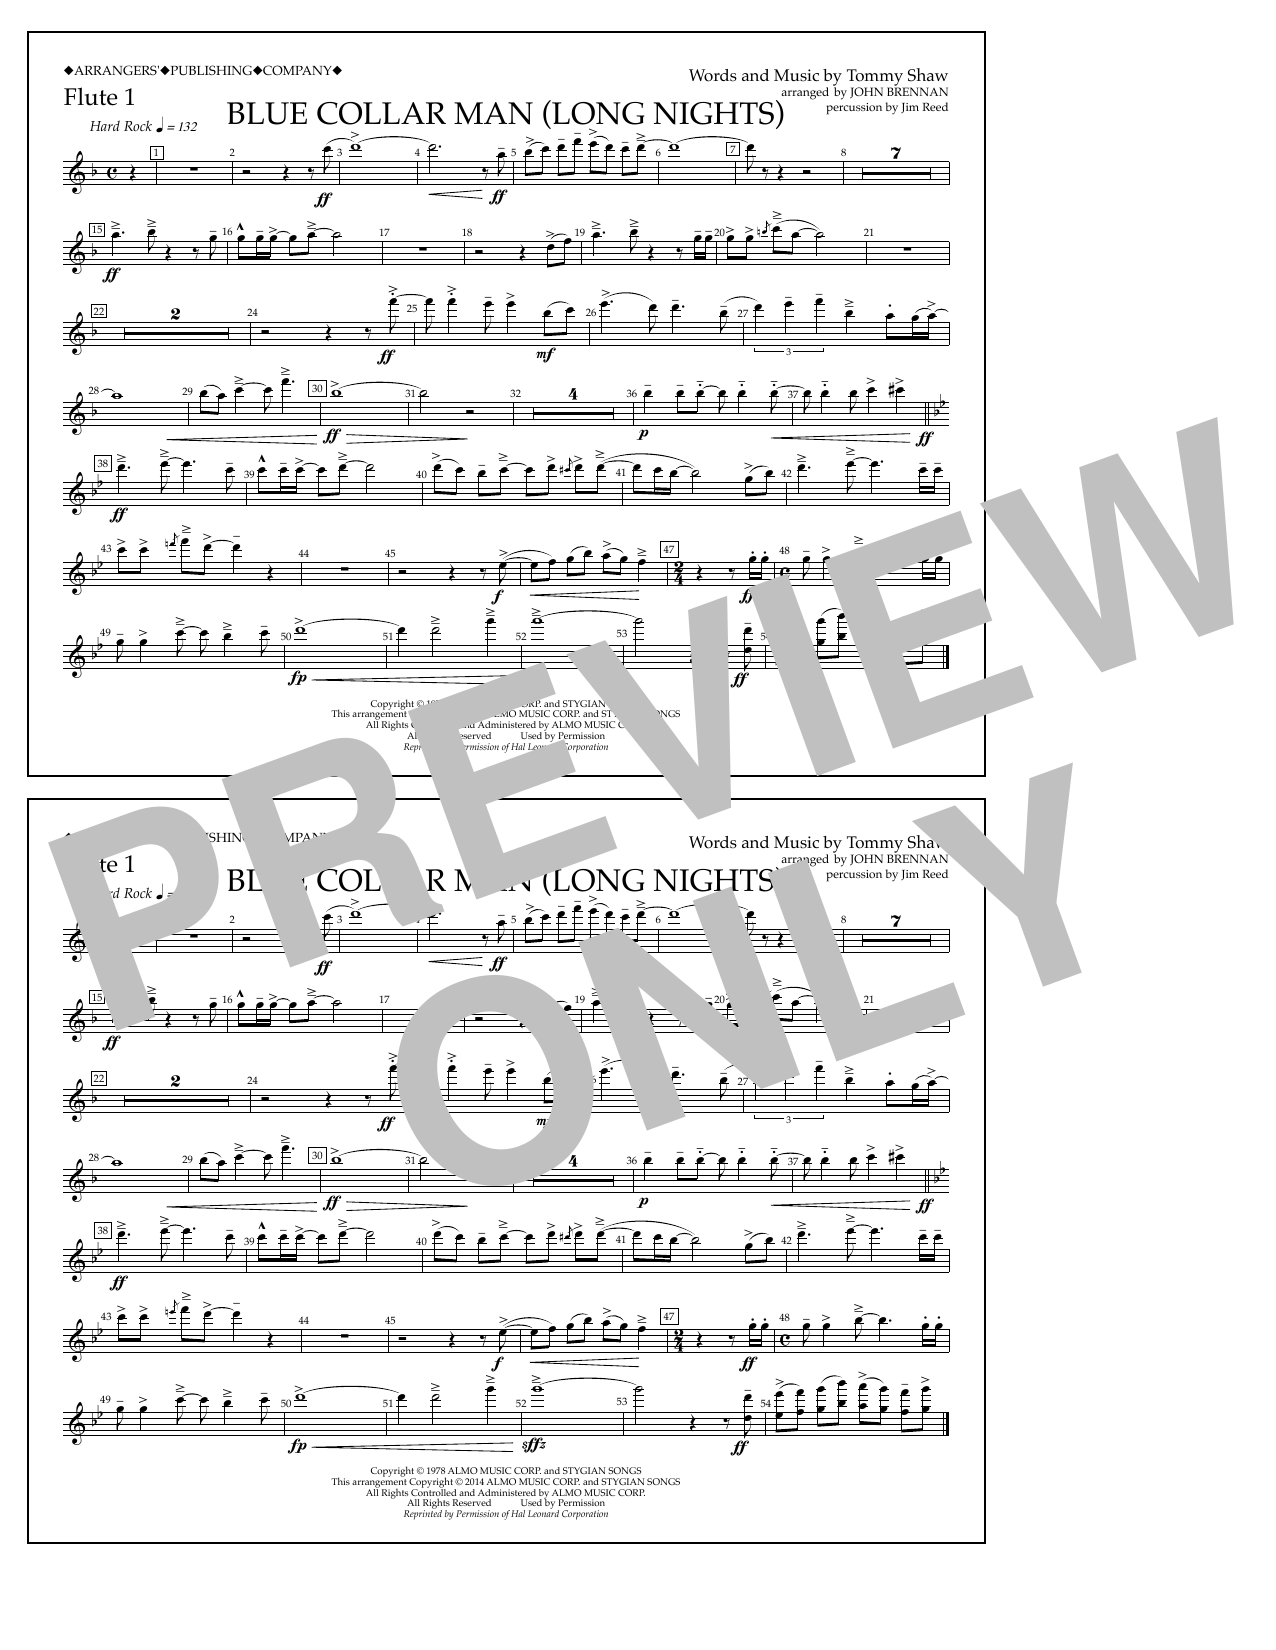 John Brennan Blue Collar Man (Long Nights) - Flute 1 Sheet Music Notes & Chords for Marching Band - Download or Print PDF